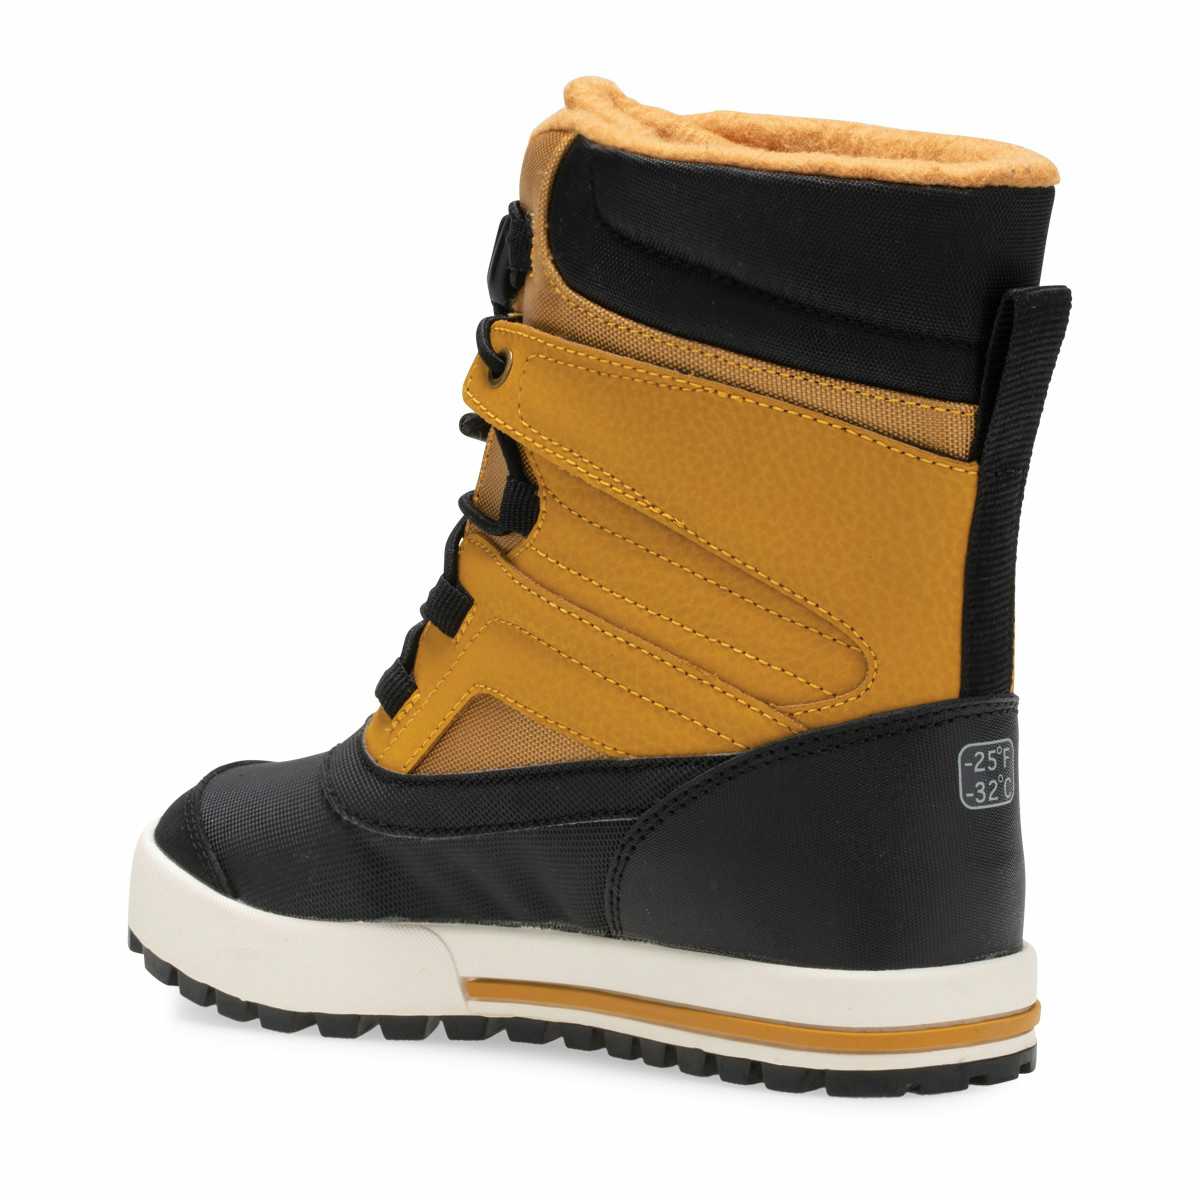 Snow Bank 2.0 Arctic Grip Waterproof Boots Wheat/Black